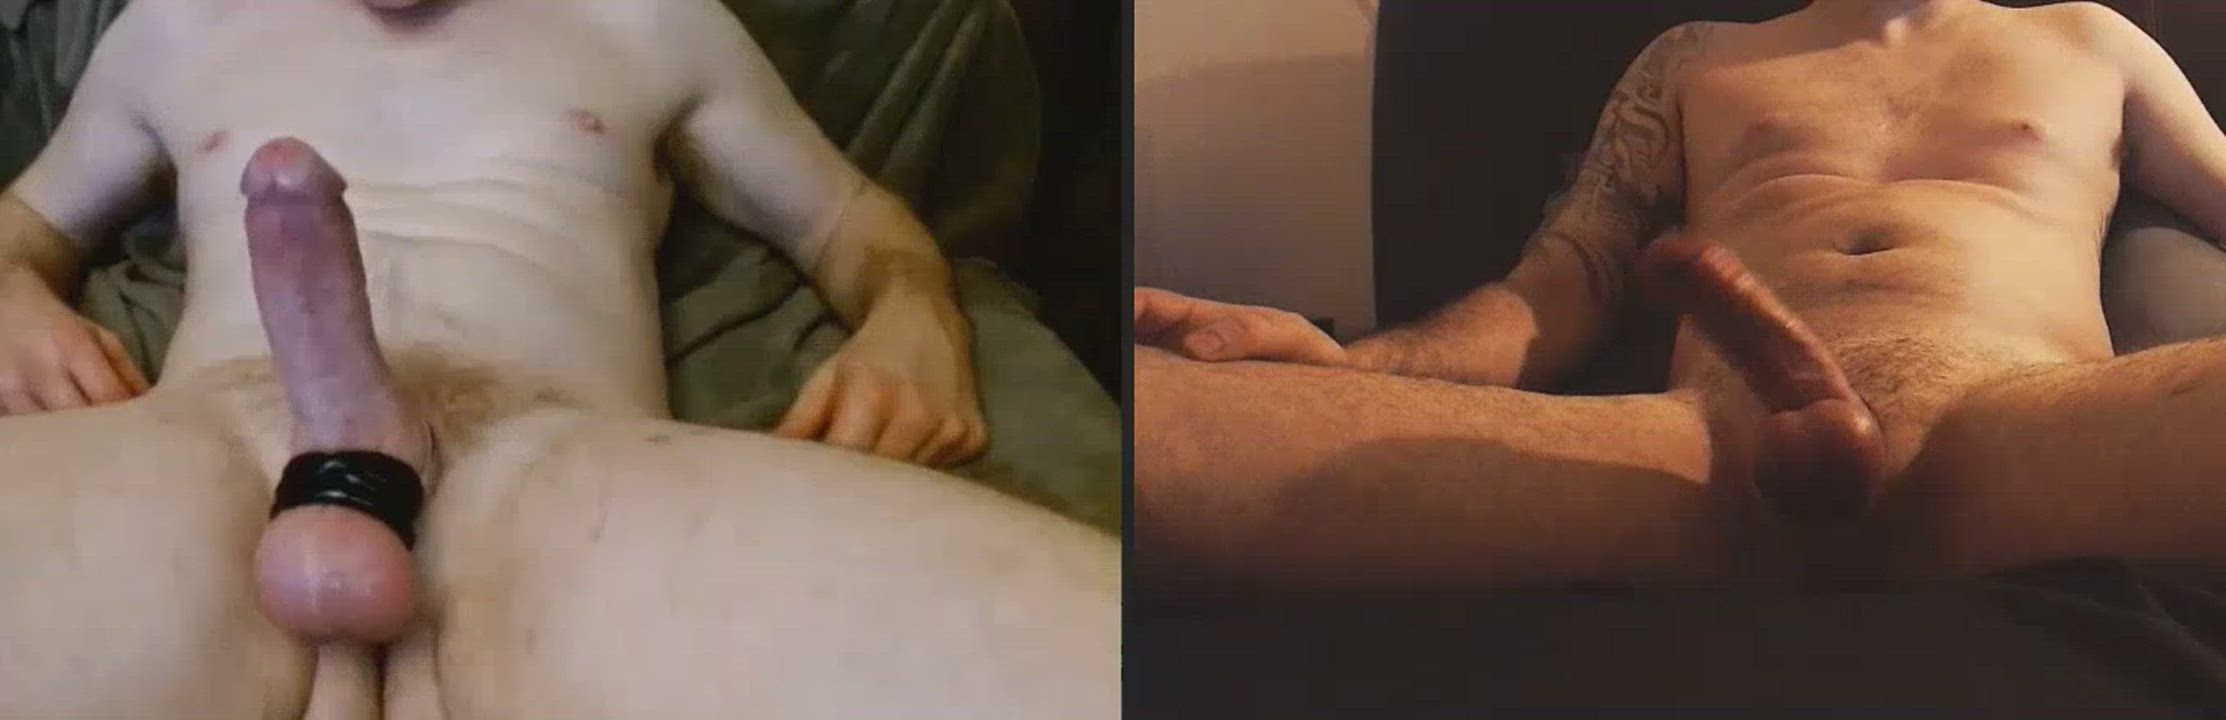 bwc big dick bisexual cam edging gay jerk off pulsating thick cock webcam clip